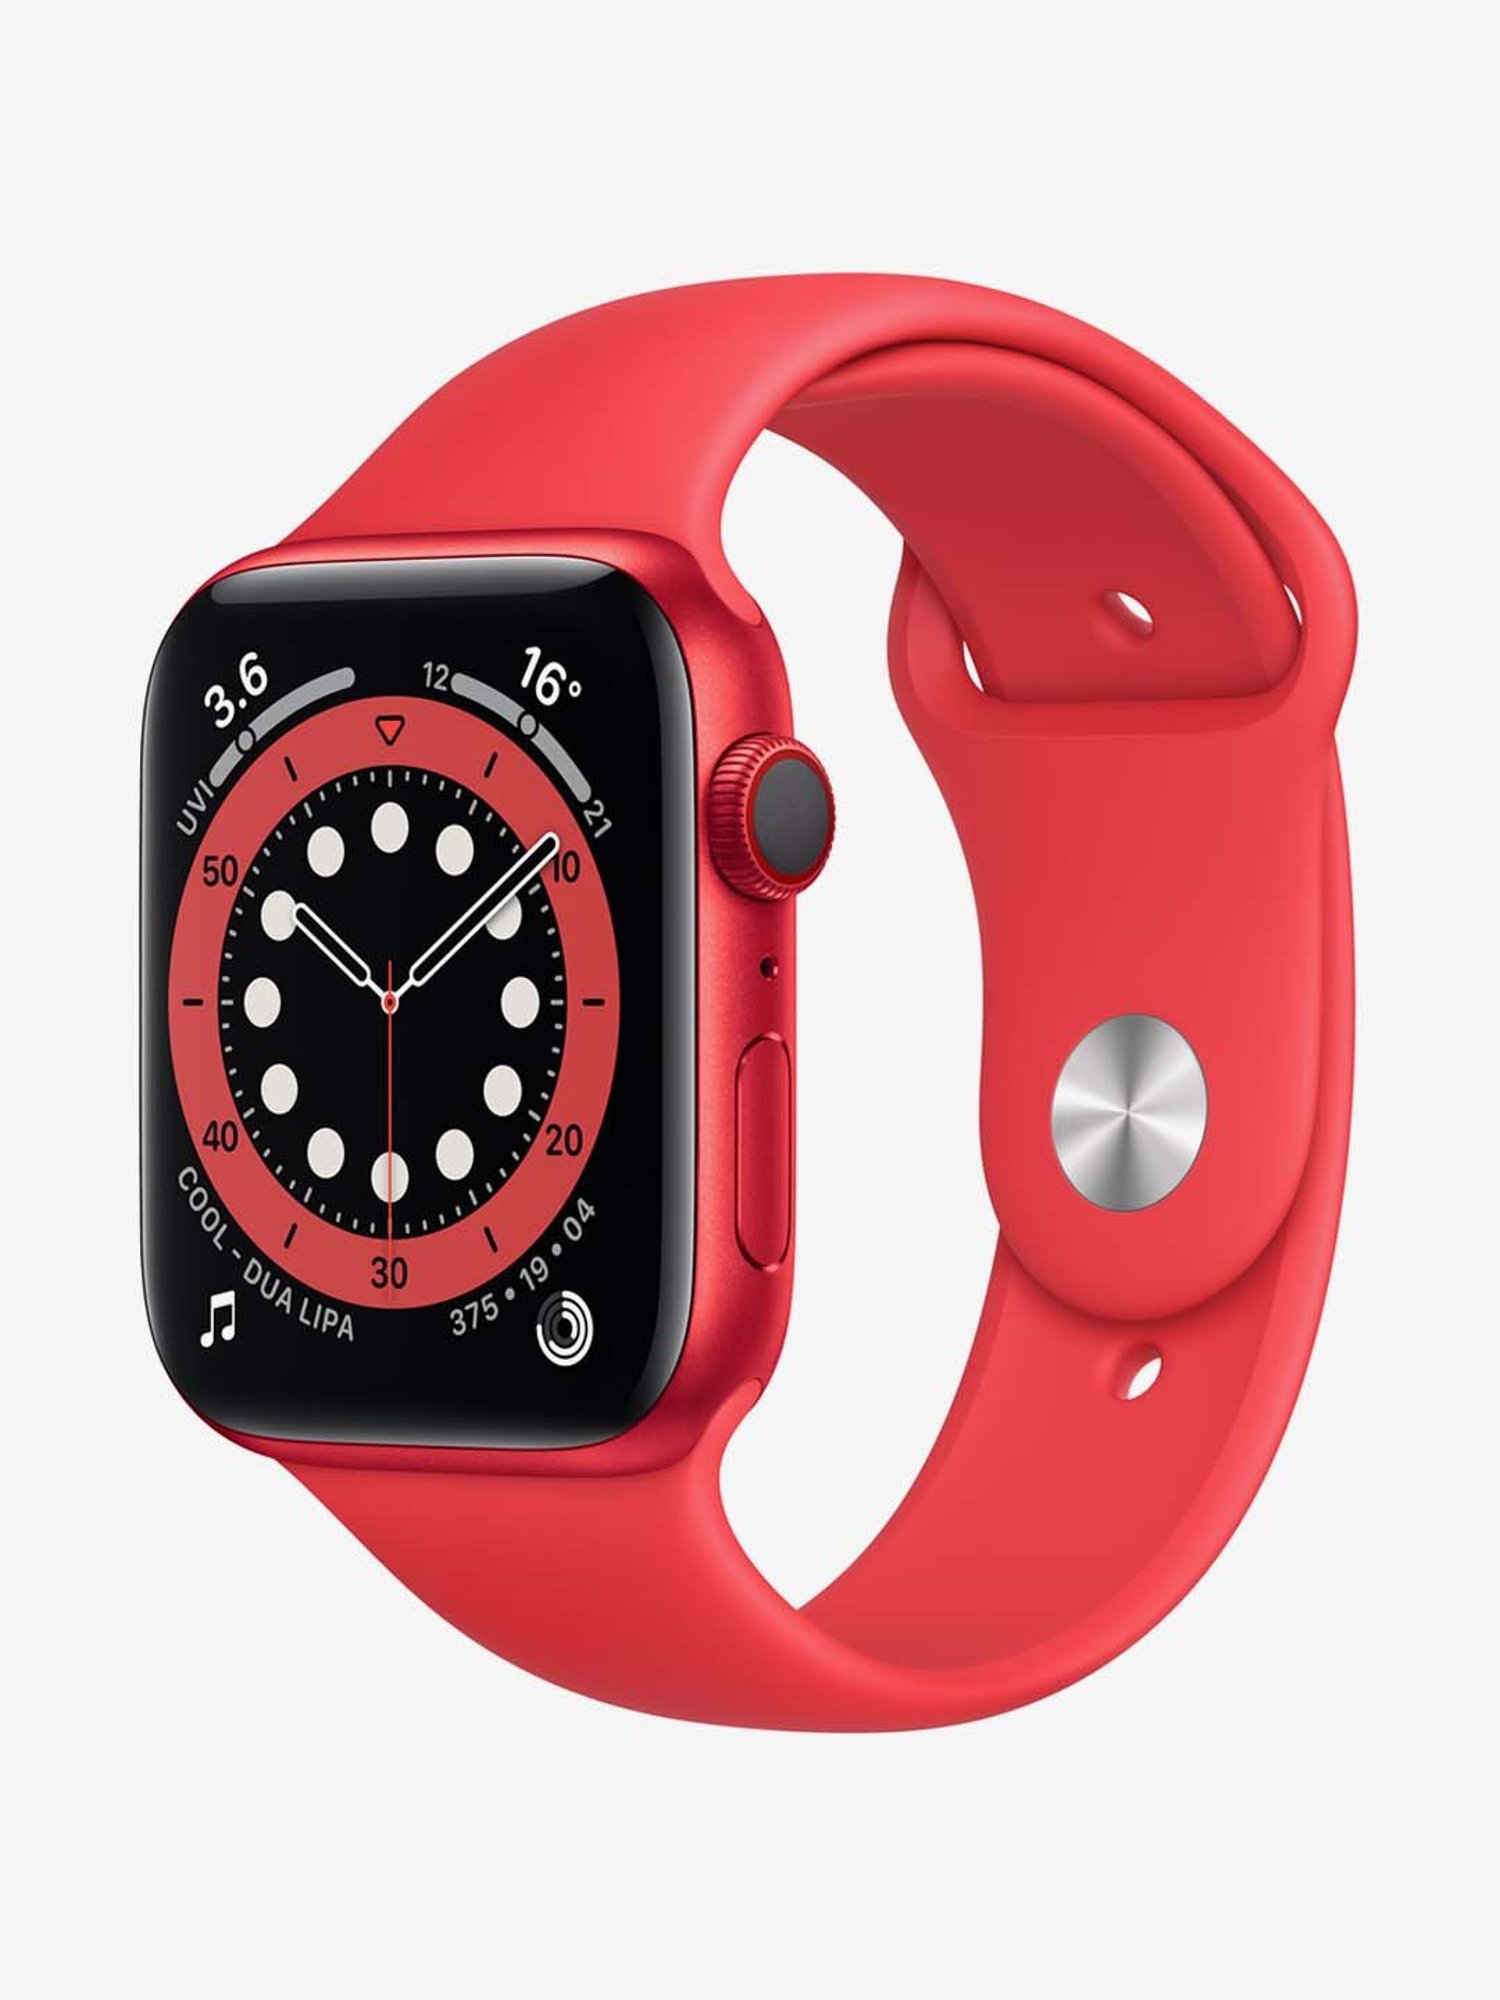 Shop i6 Smart Watch W26 Full Touch Screen at best price | GoshopperQa.com |  af4732711661056eadbf798ba191272a